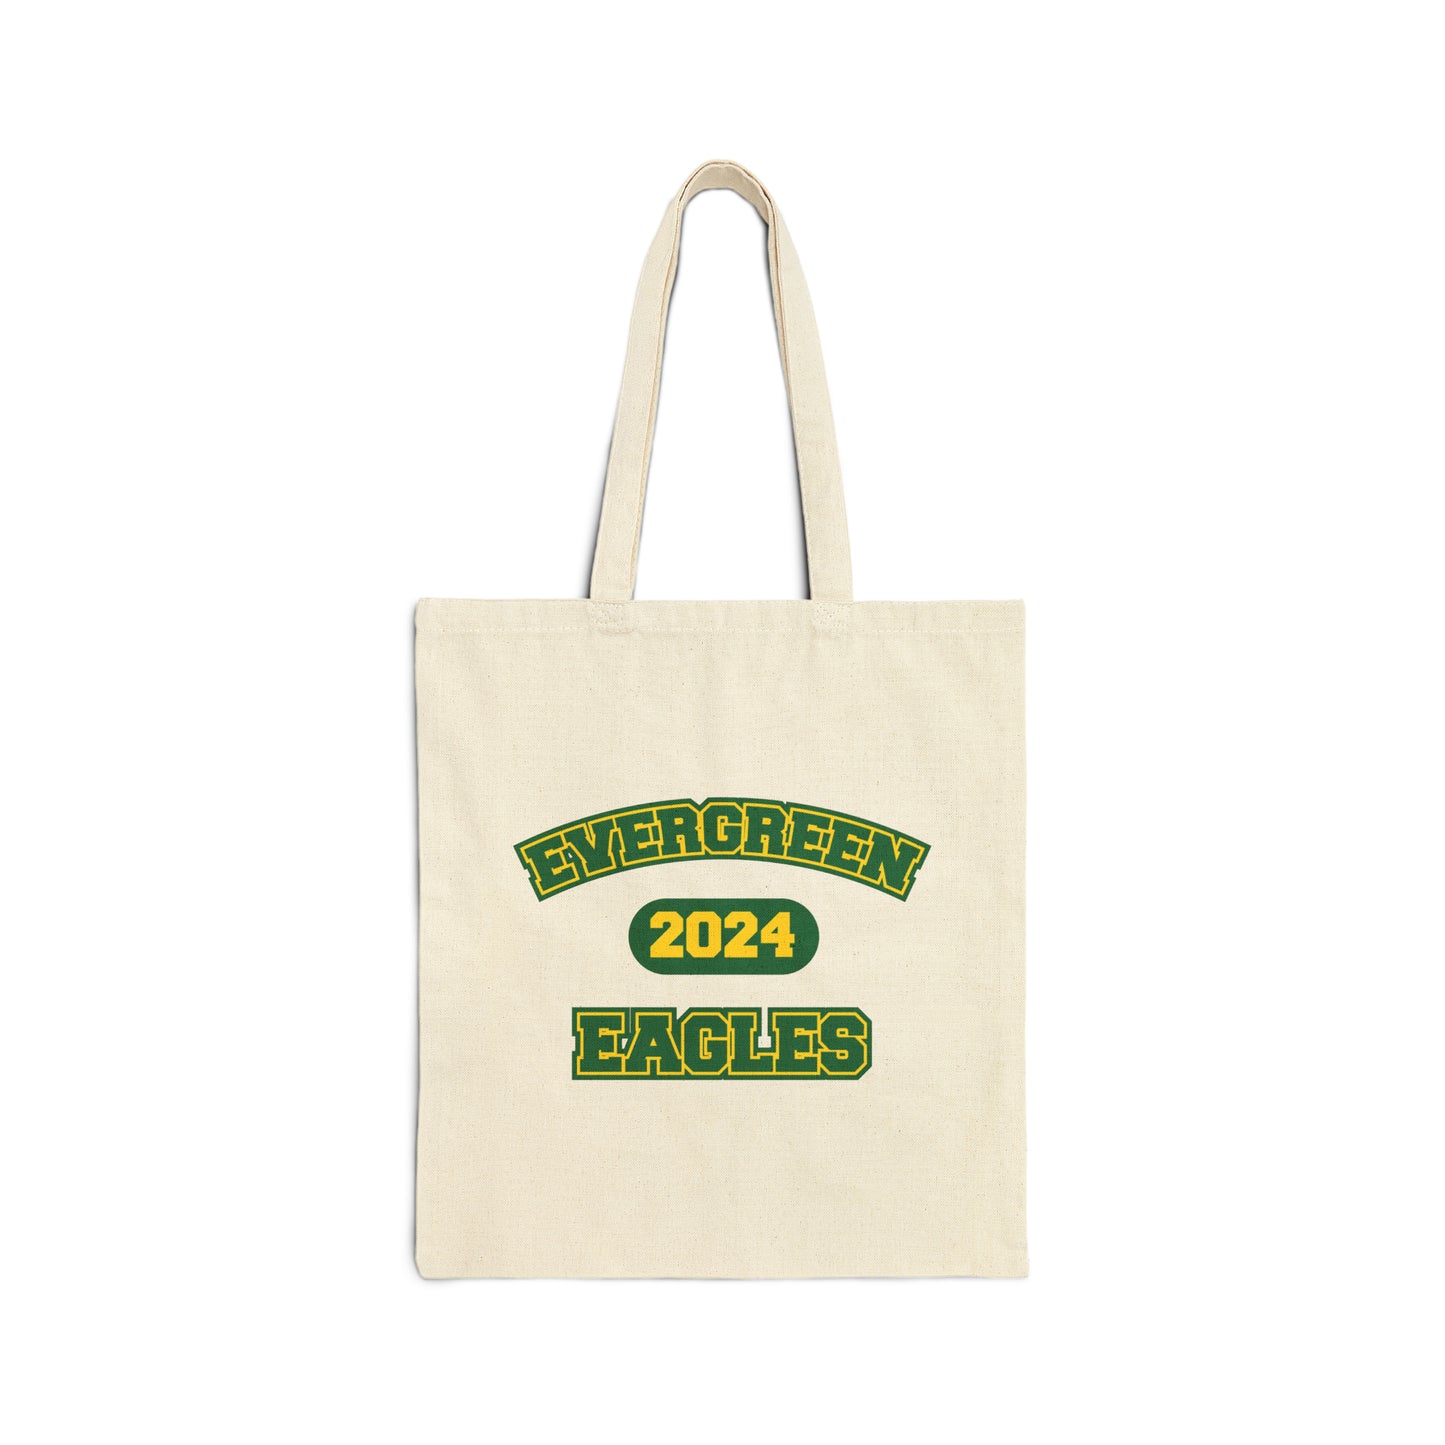 Eagles 2024 - Canvas Tote Bag